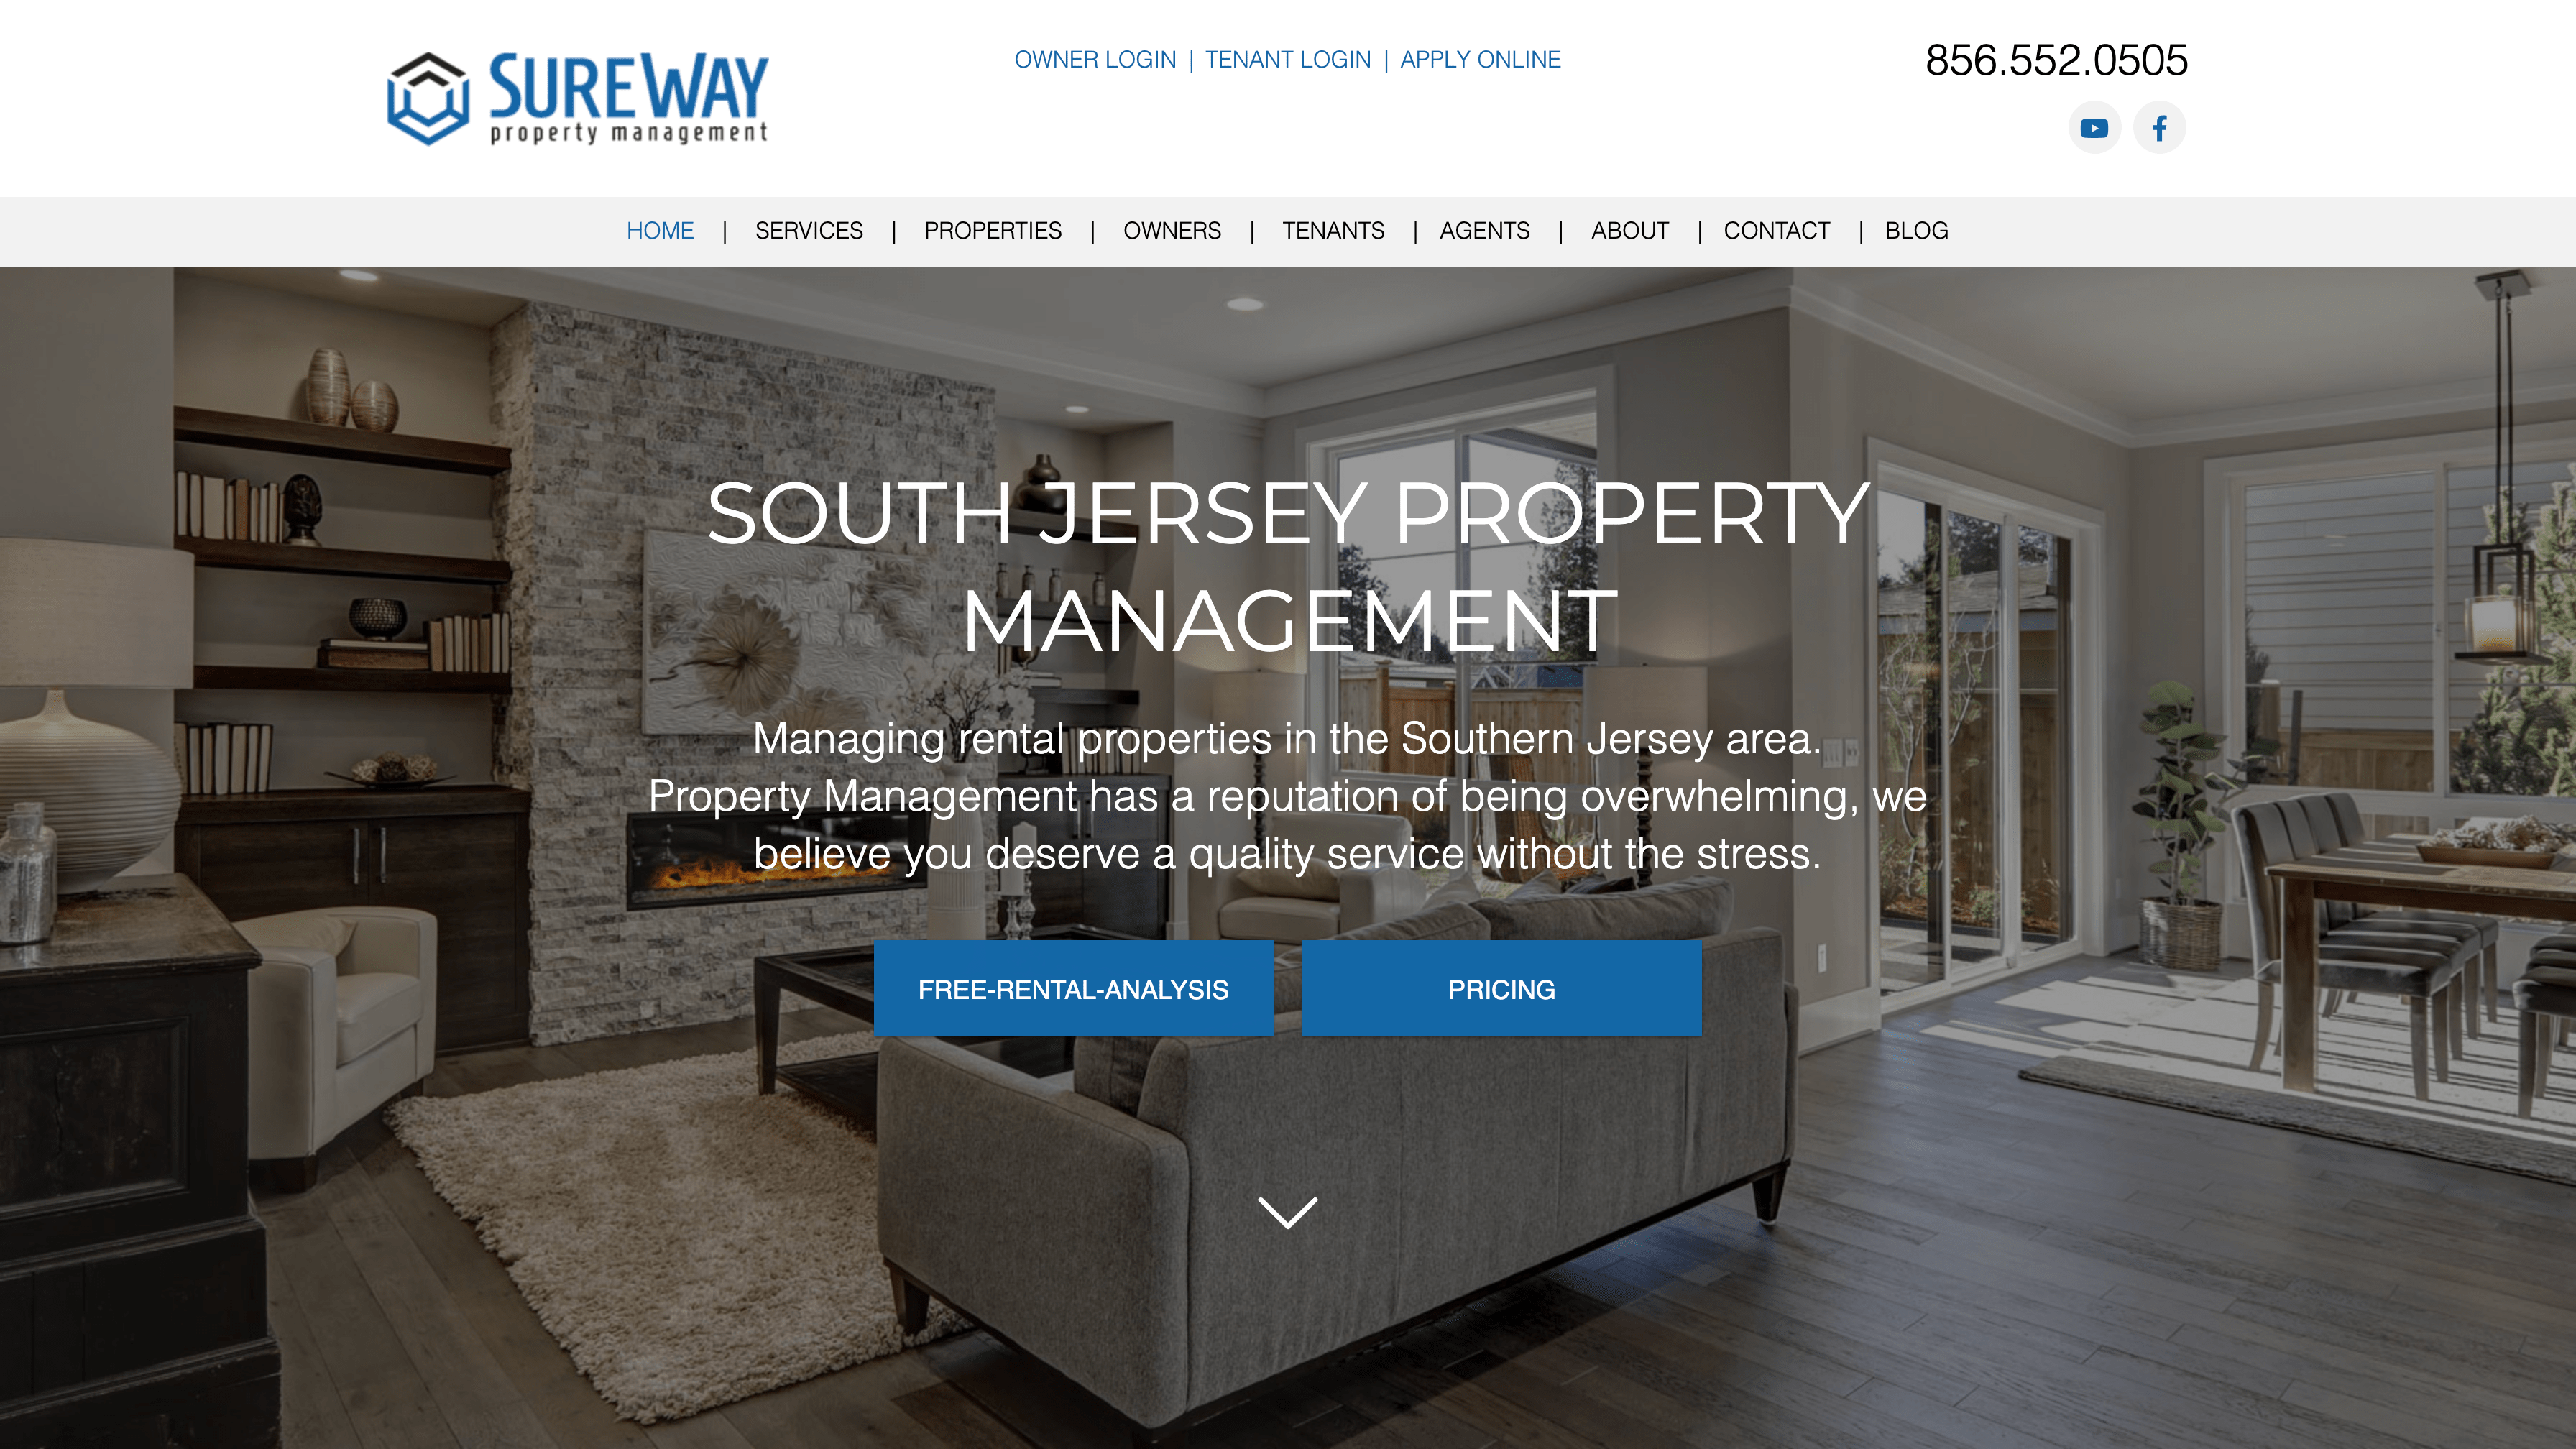 Owner Resources | SureWay Property Management